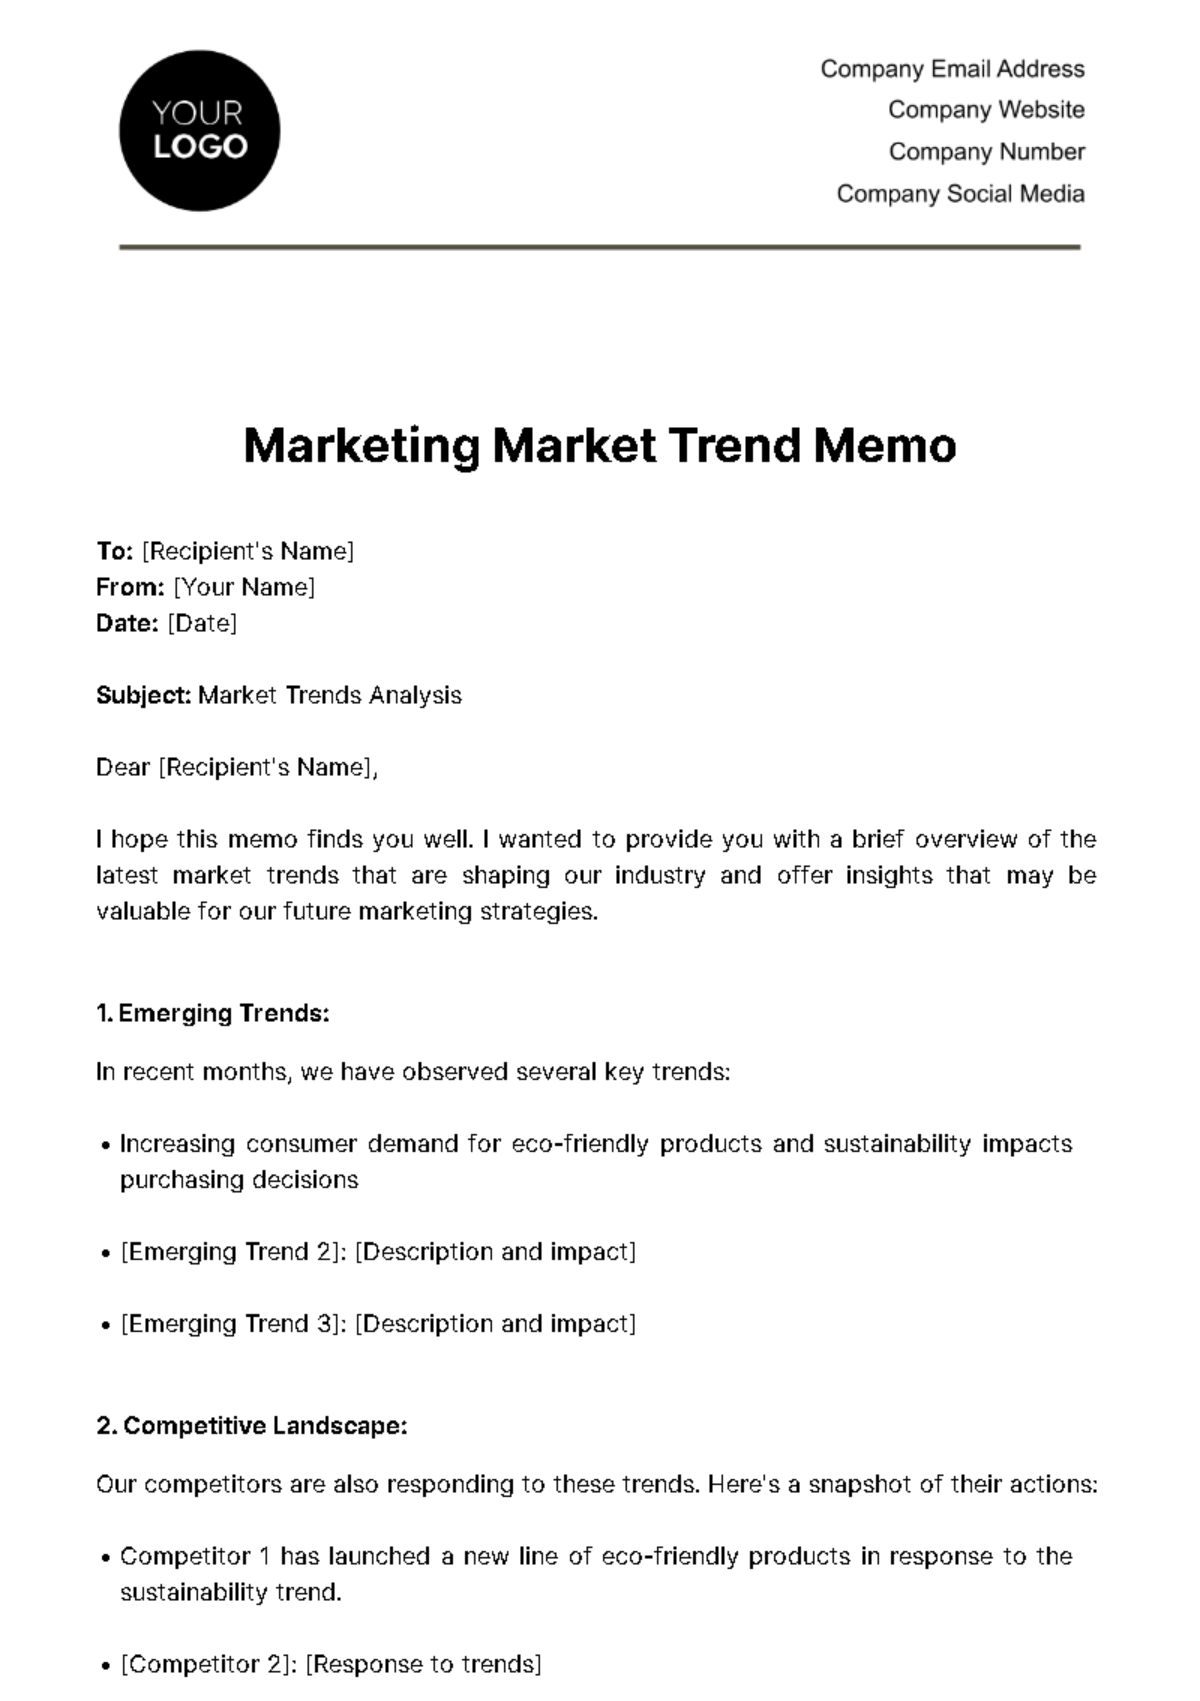 Free Marketing Market Trend Memo Template